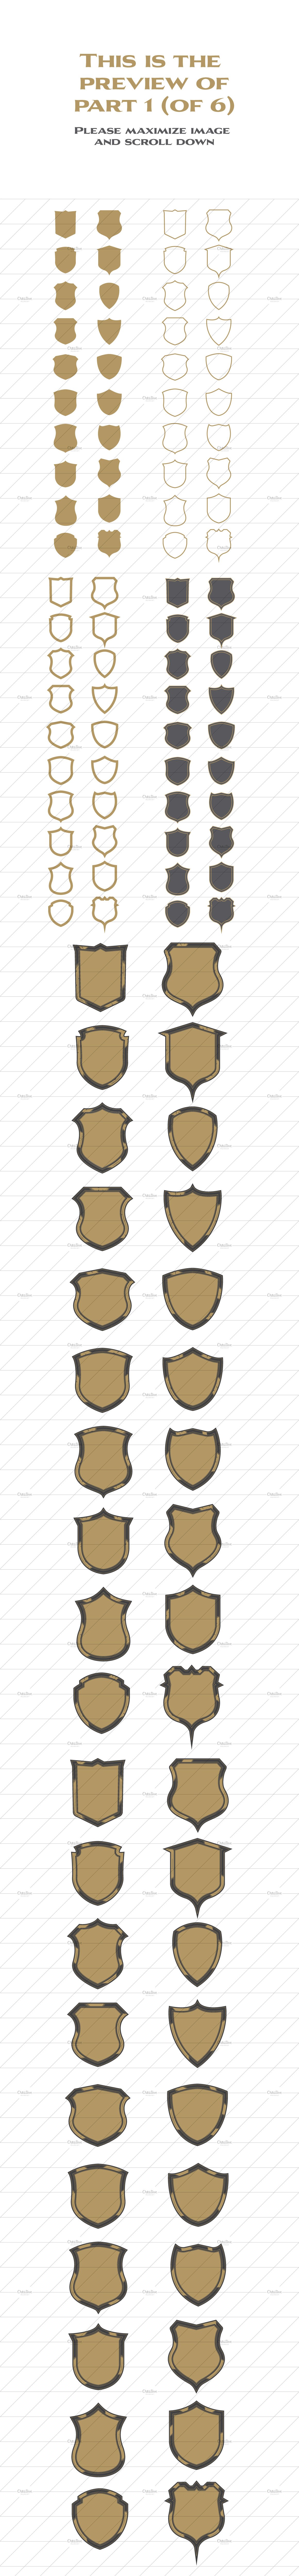 1080 shields shapes vector set base shapes preview part 1 833